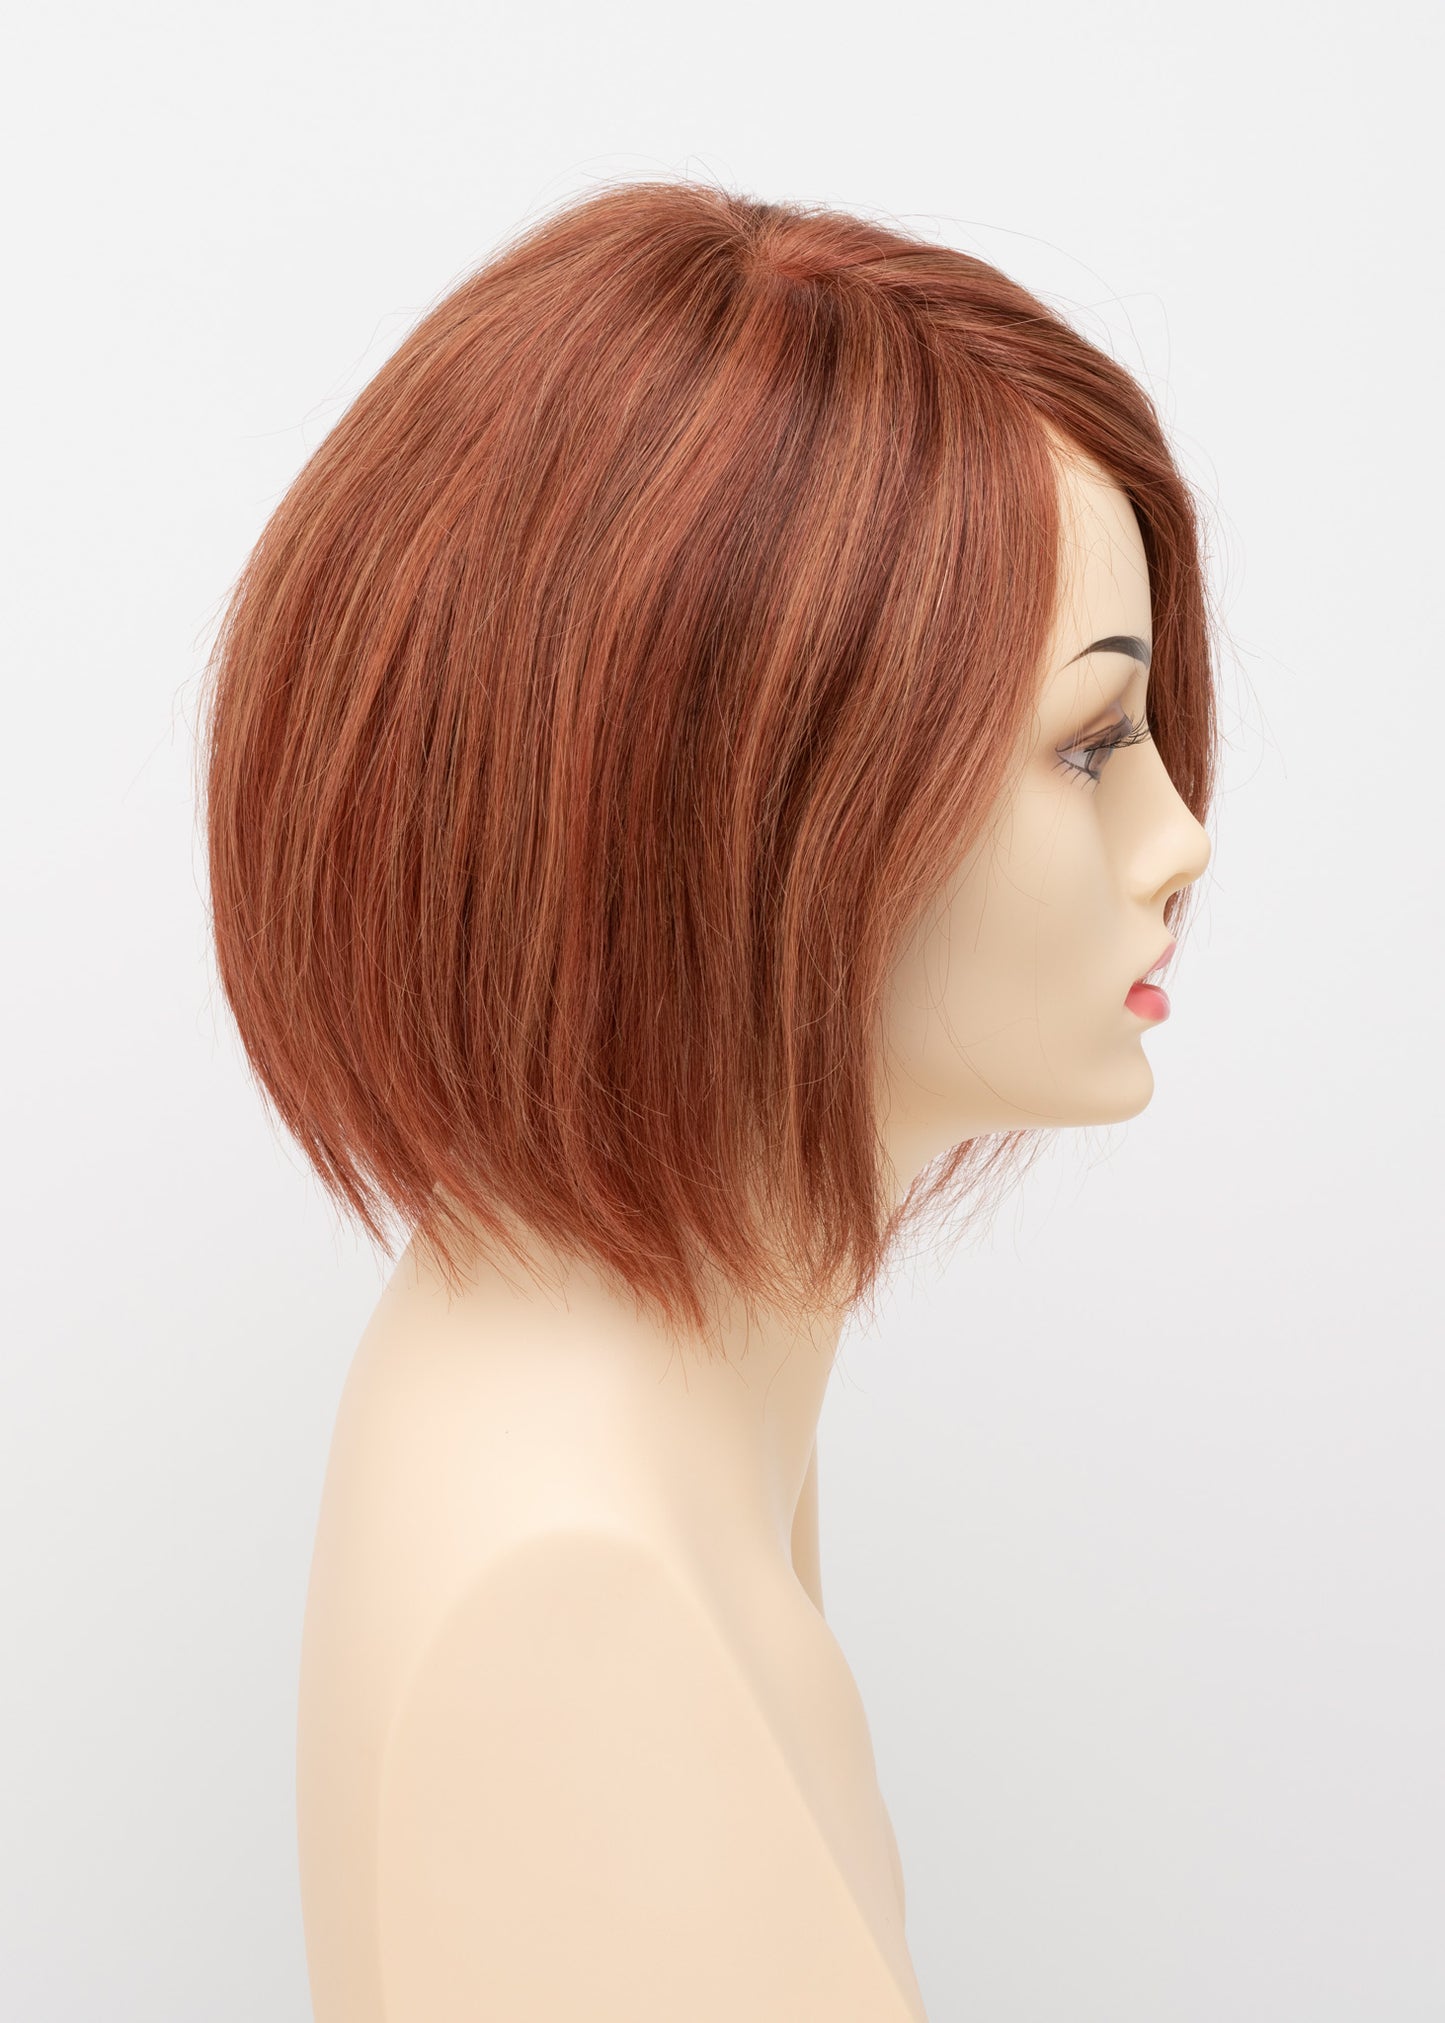 AMELIA - Mono Top Lace Front Handtied Human Hair Wig